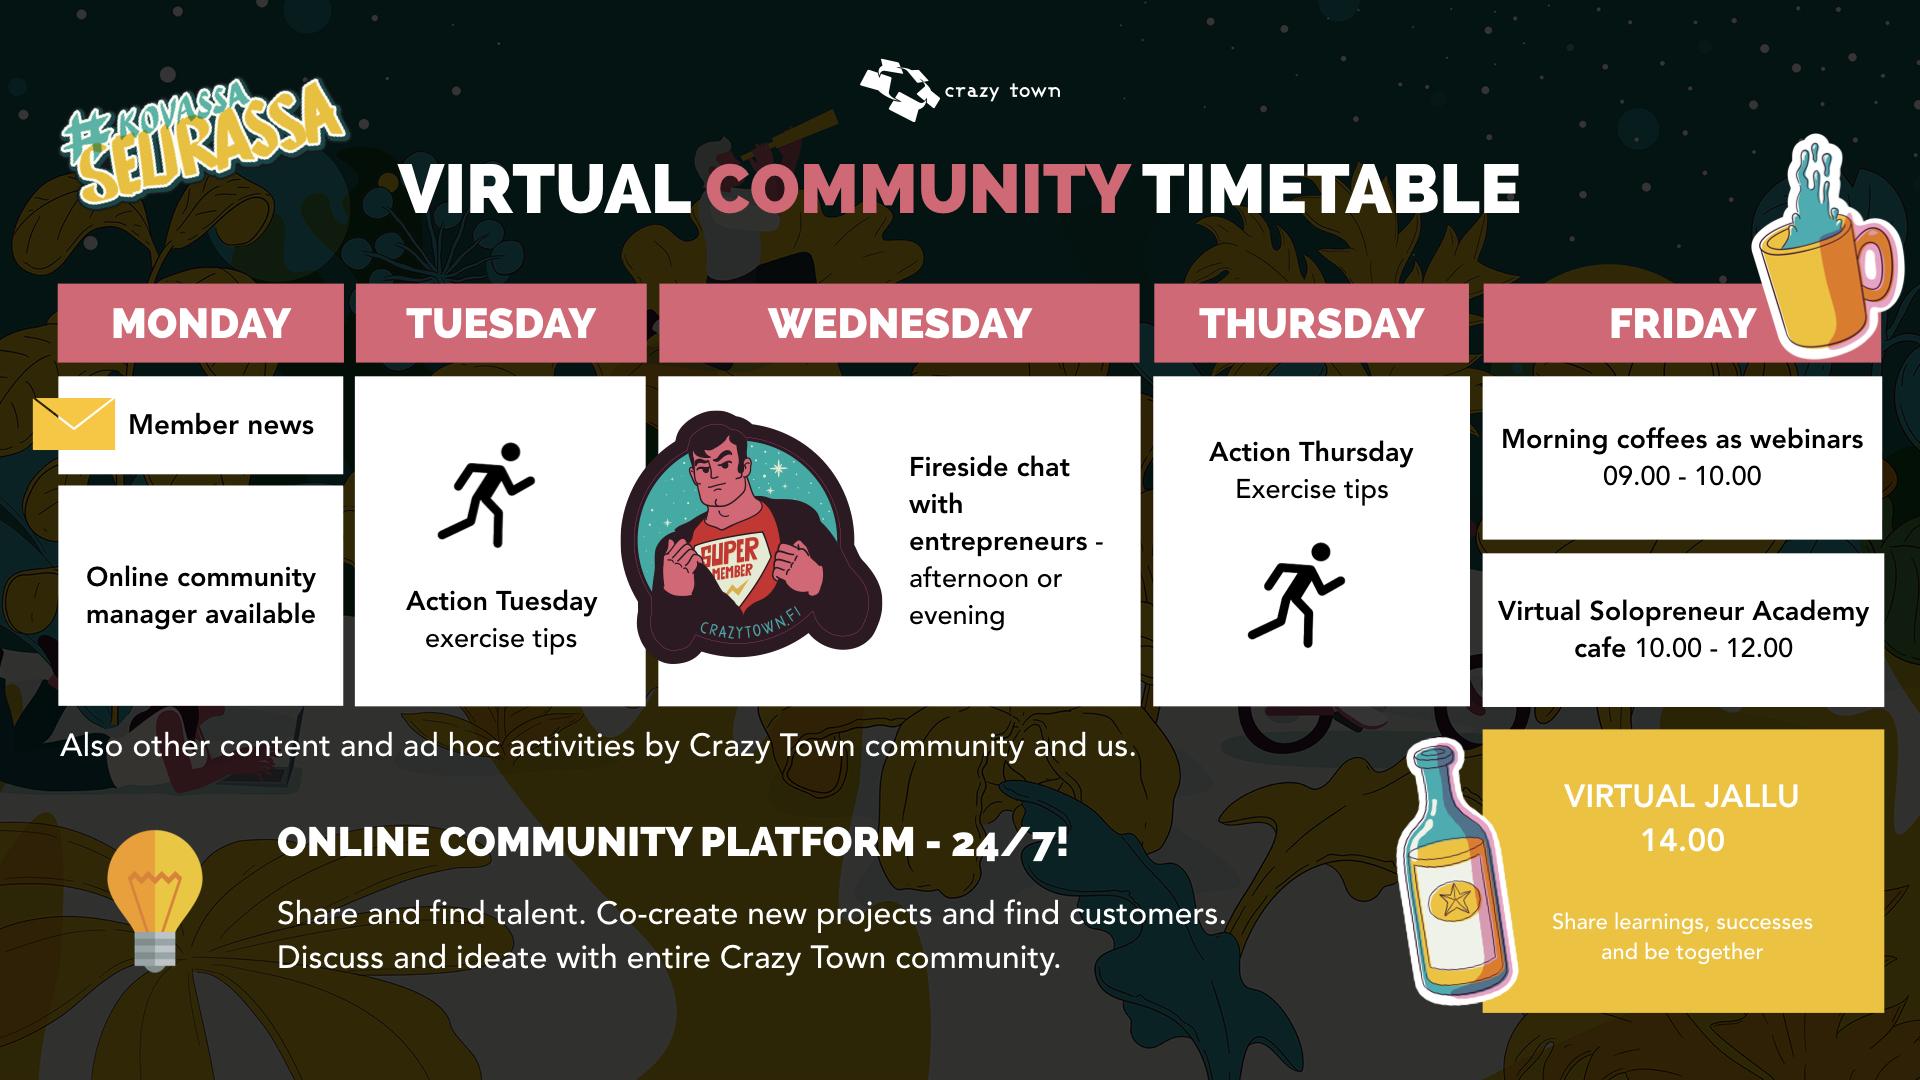 Crazy Town community goes digital